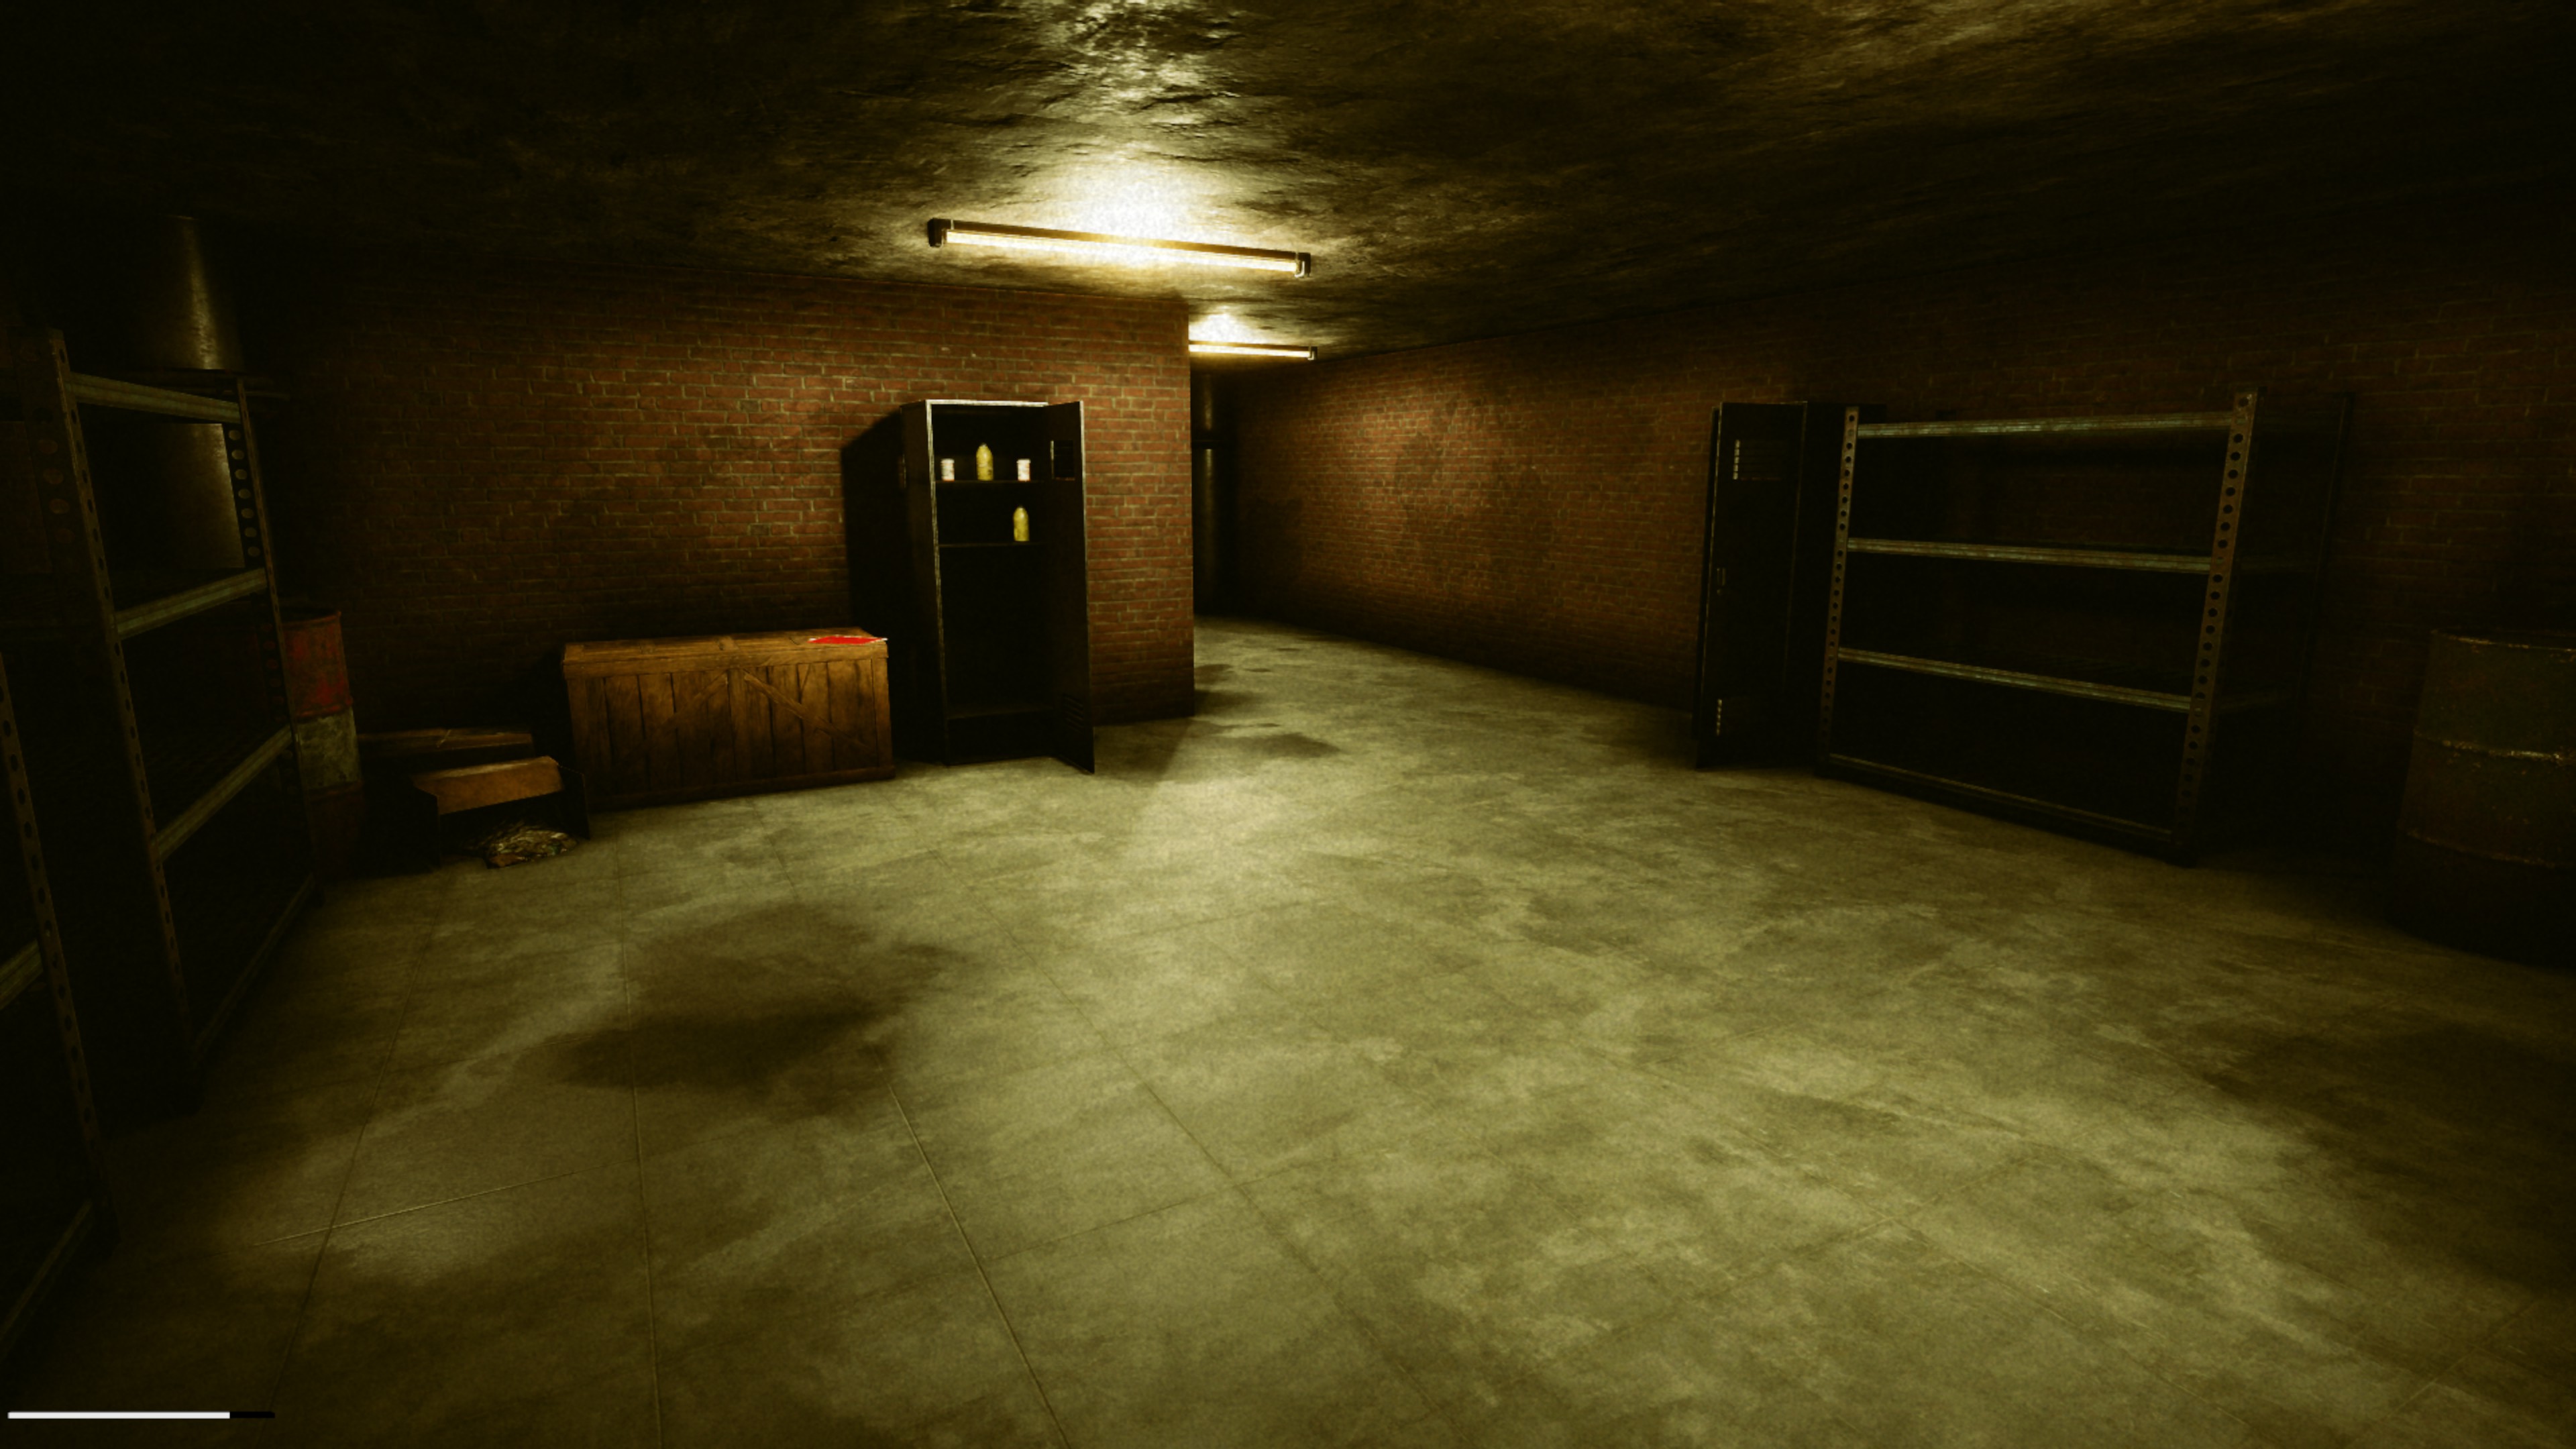 Inside the Backrooms (ALL LEVELS + ENDING) Walkthrough Gameplay